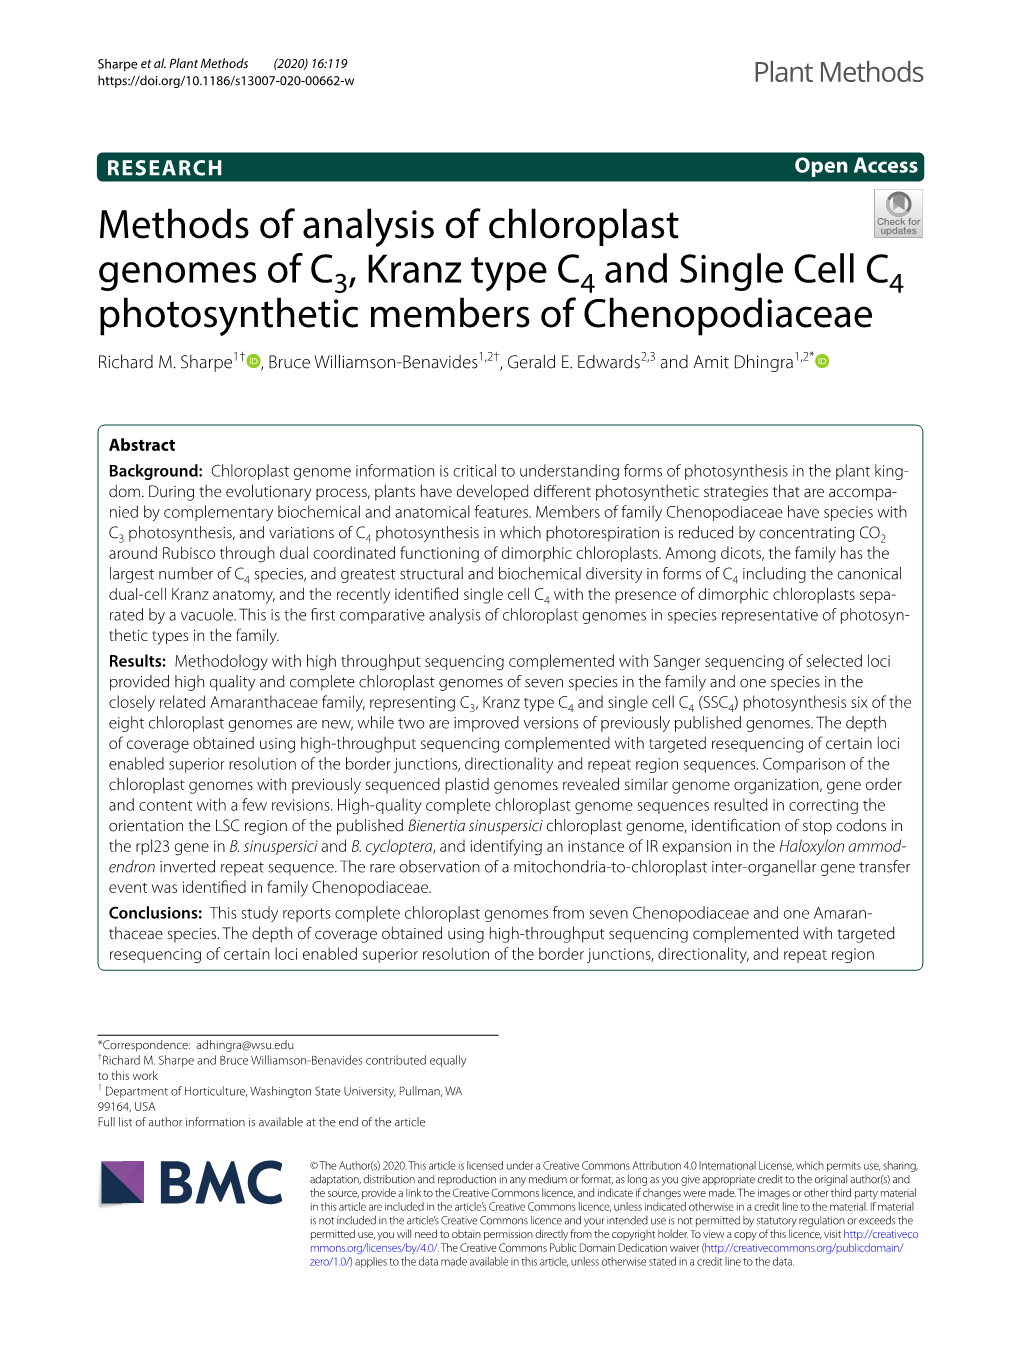 Methods of Analysis of Chloroplast Genomes of C3, Kranz Type C4 And